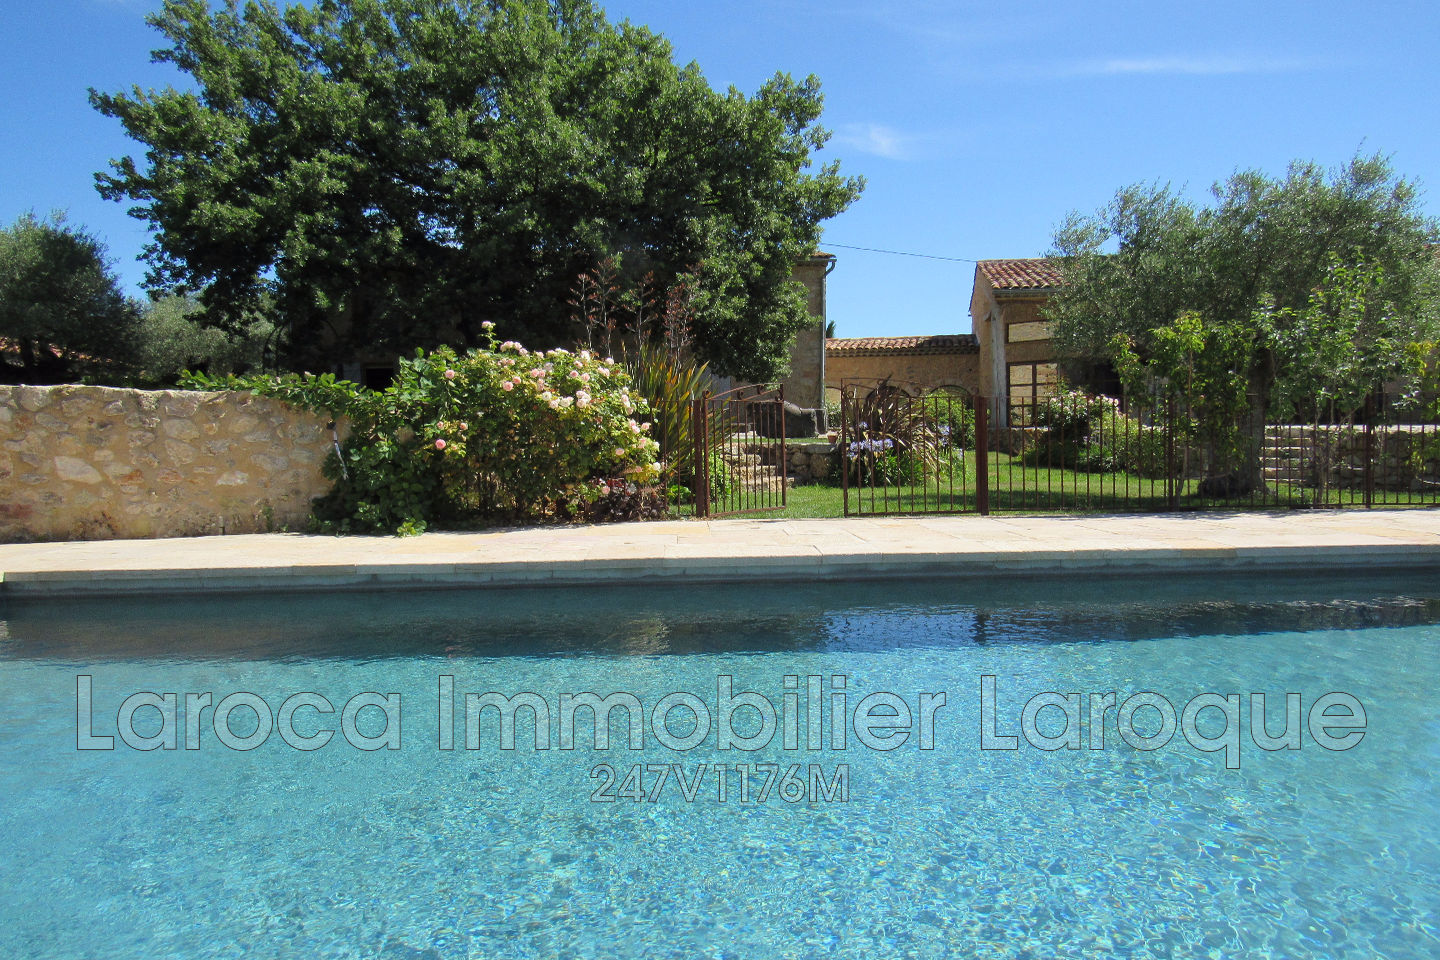 4 bed House - Villa For Sale in Lorgues Draguignan area, 